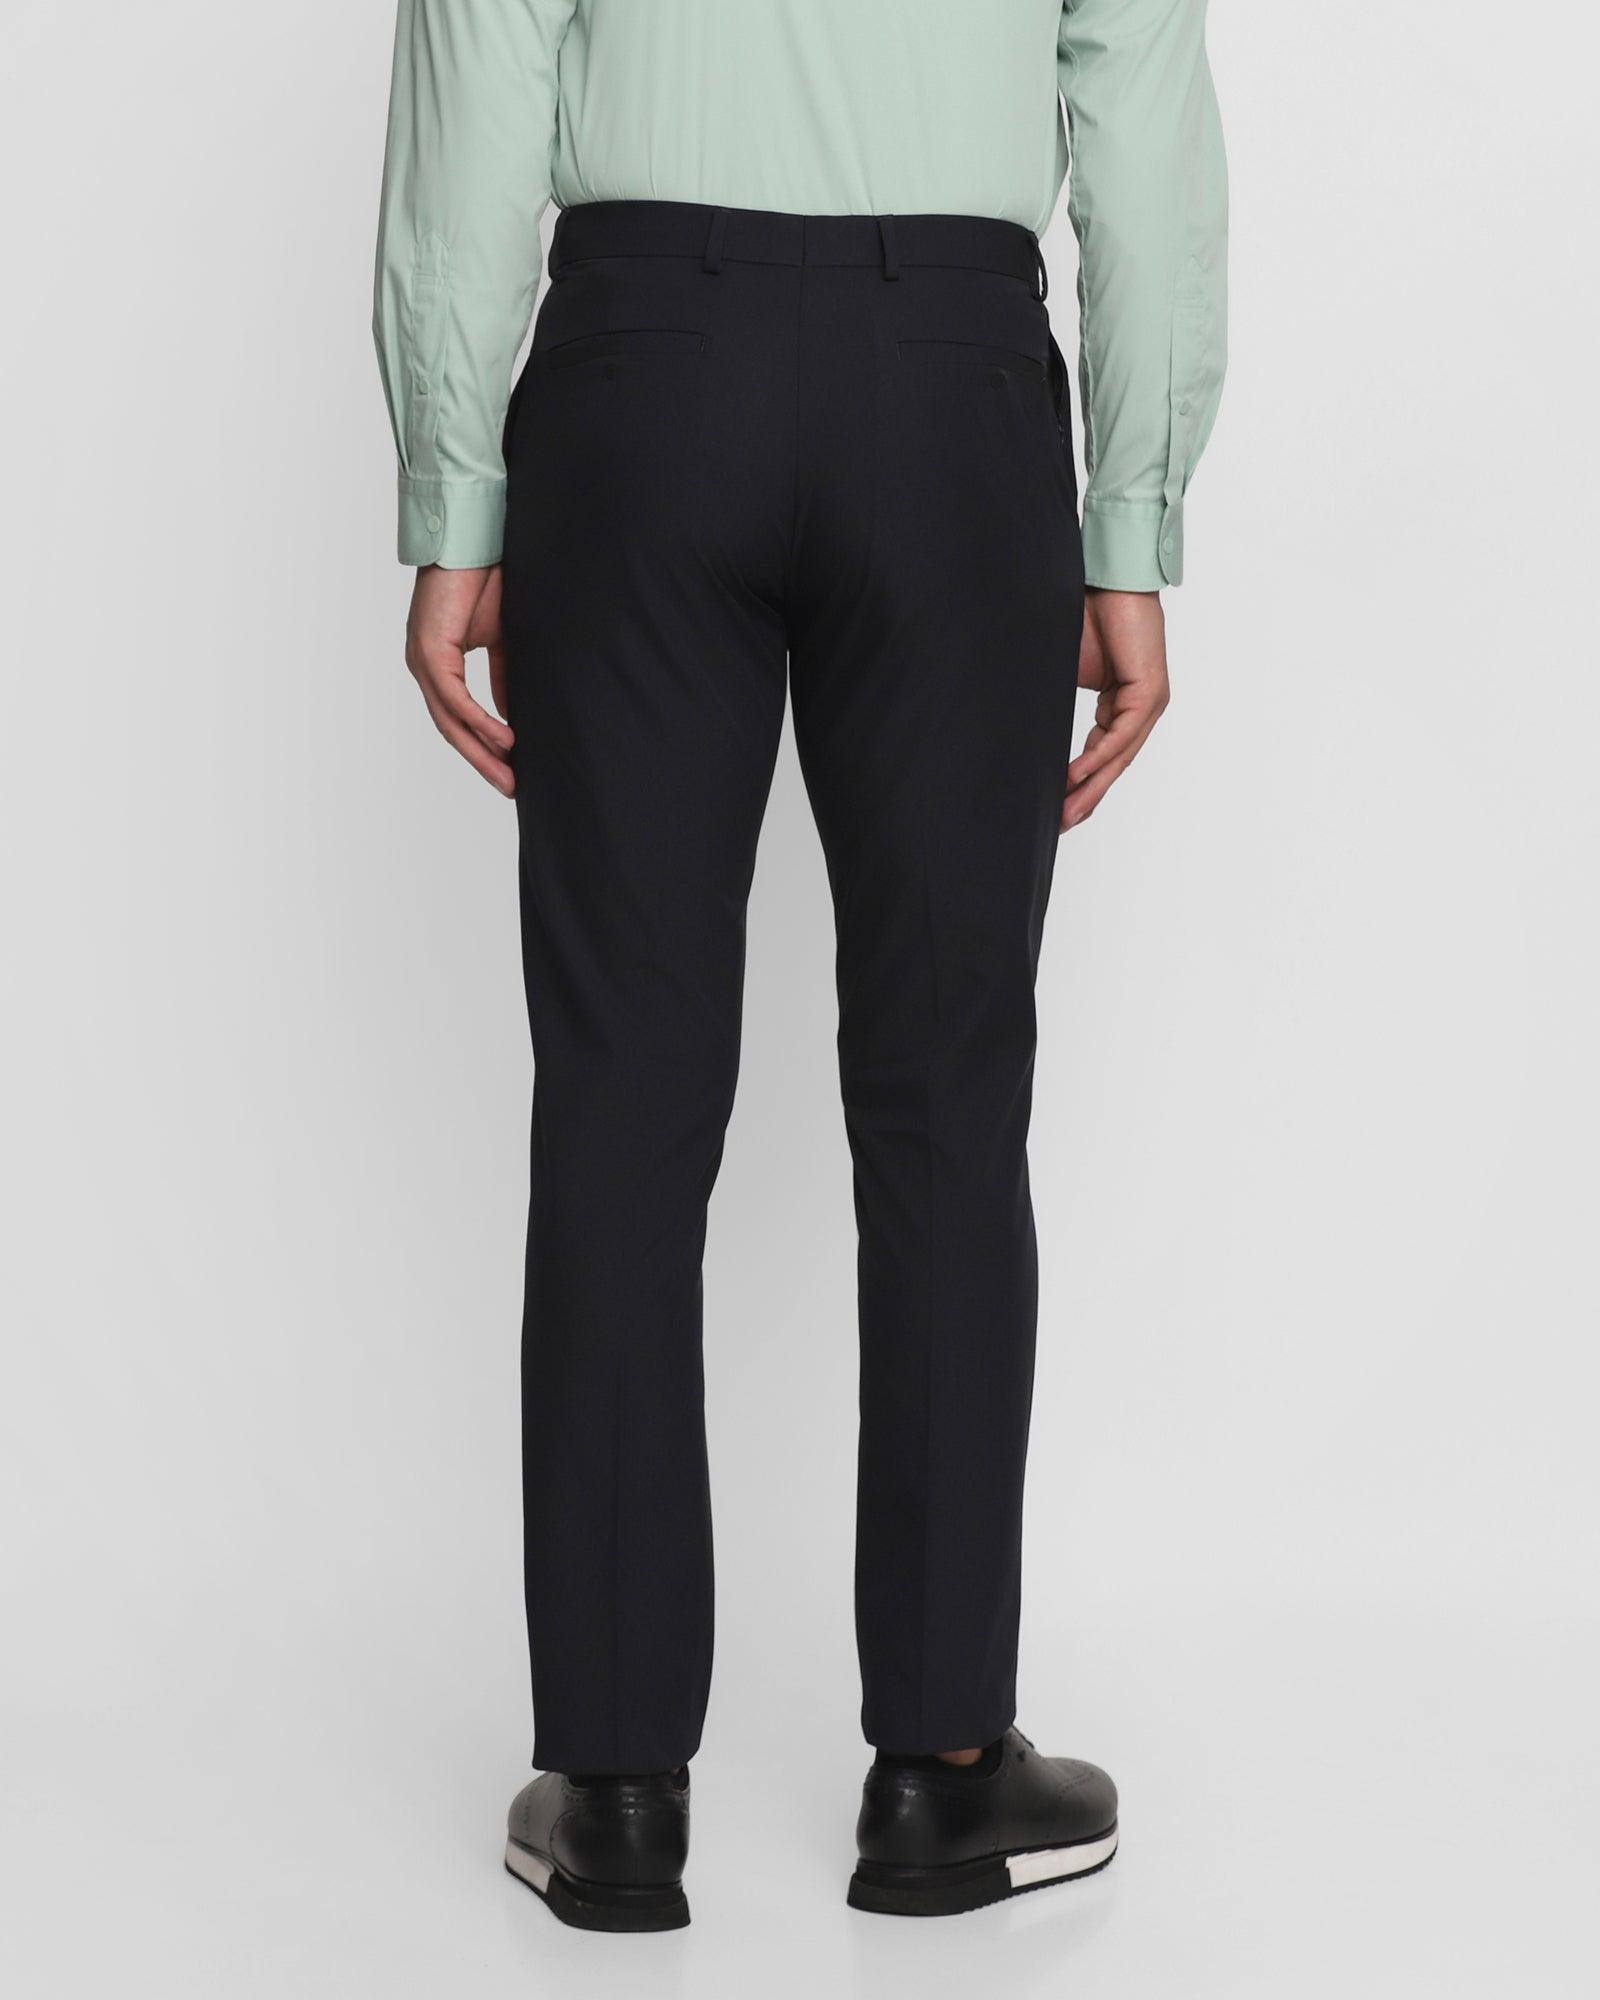 Jade Black Plain Solid Regular Fit Terry Rayon Pants For Men